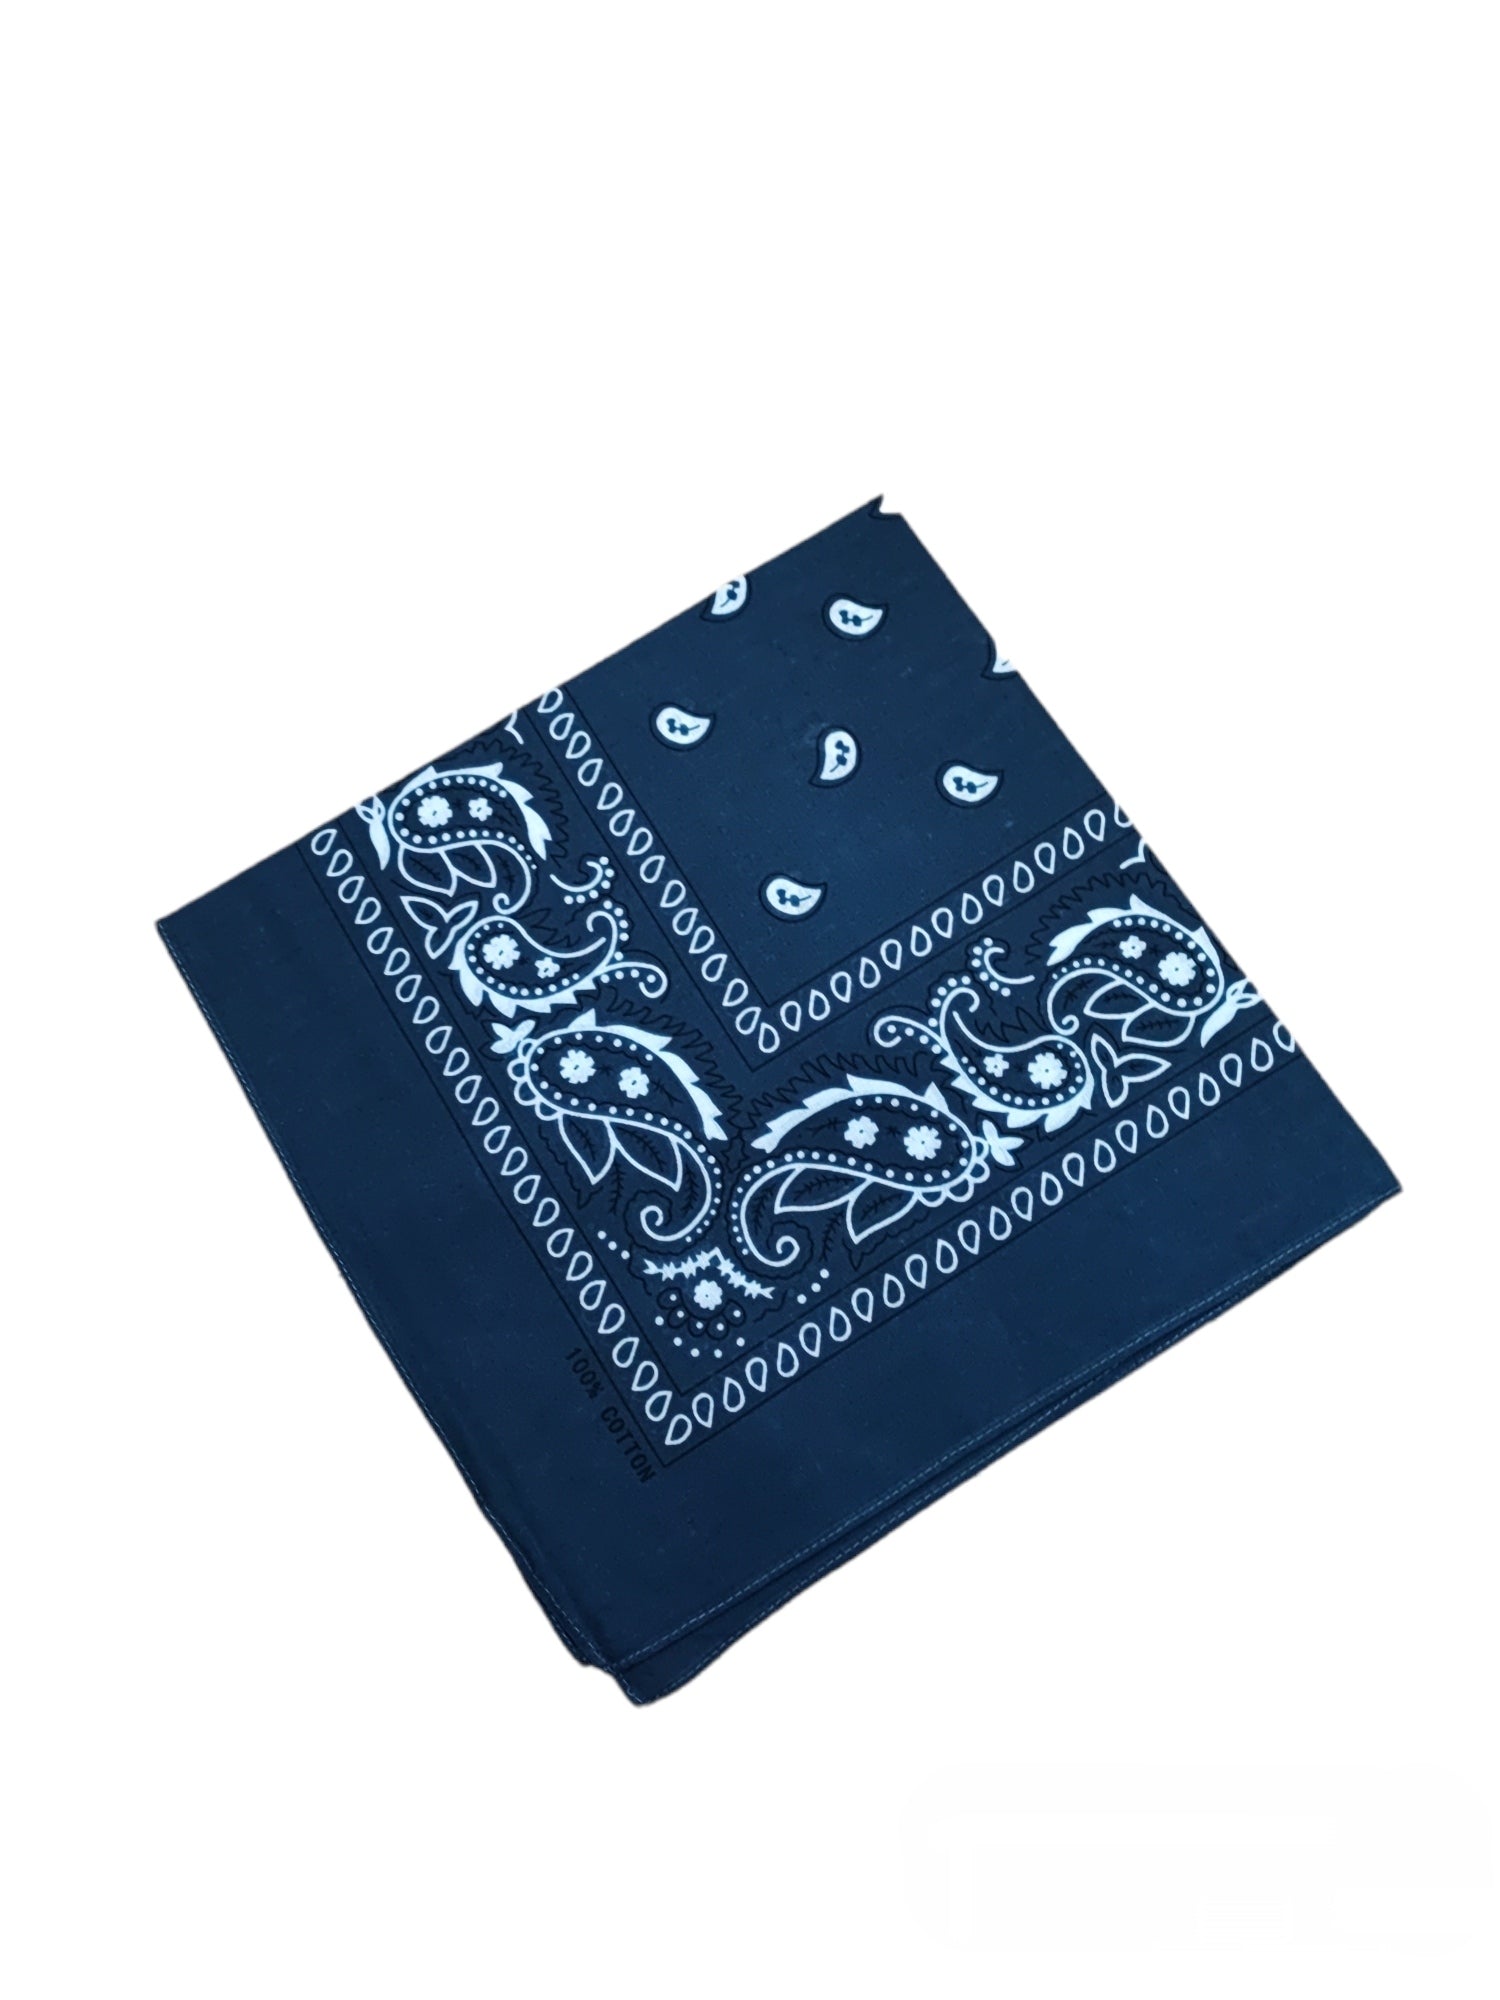 Bandana 100% coton Motif Paisley - paquet couleurs mélangés (x12)